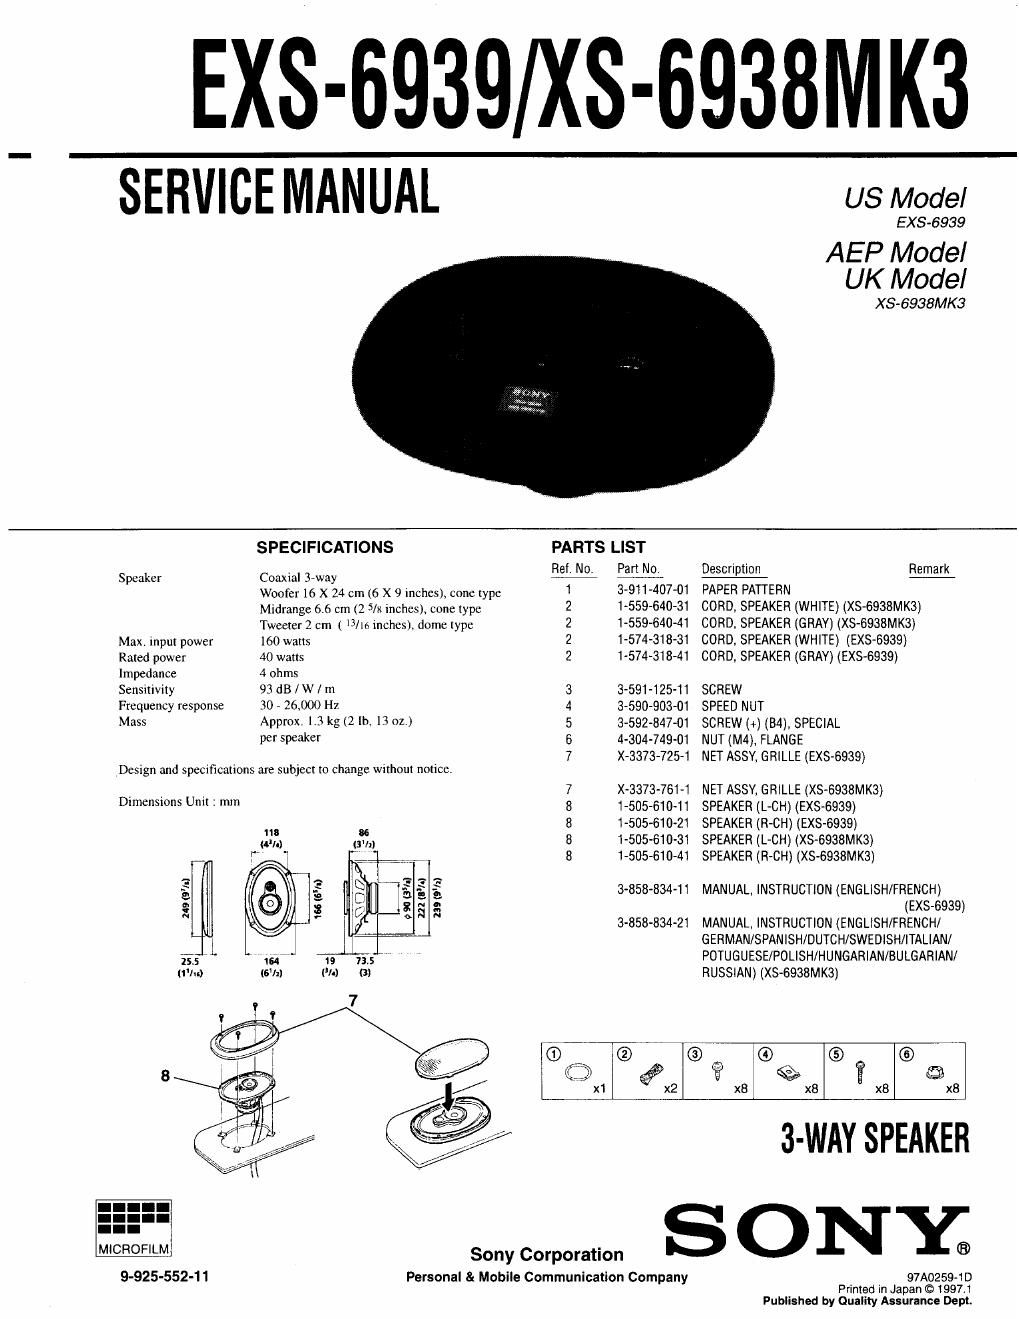 sony exs 6938 mk3 service manual